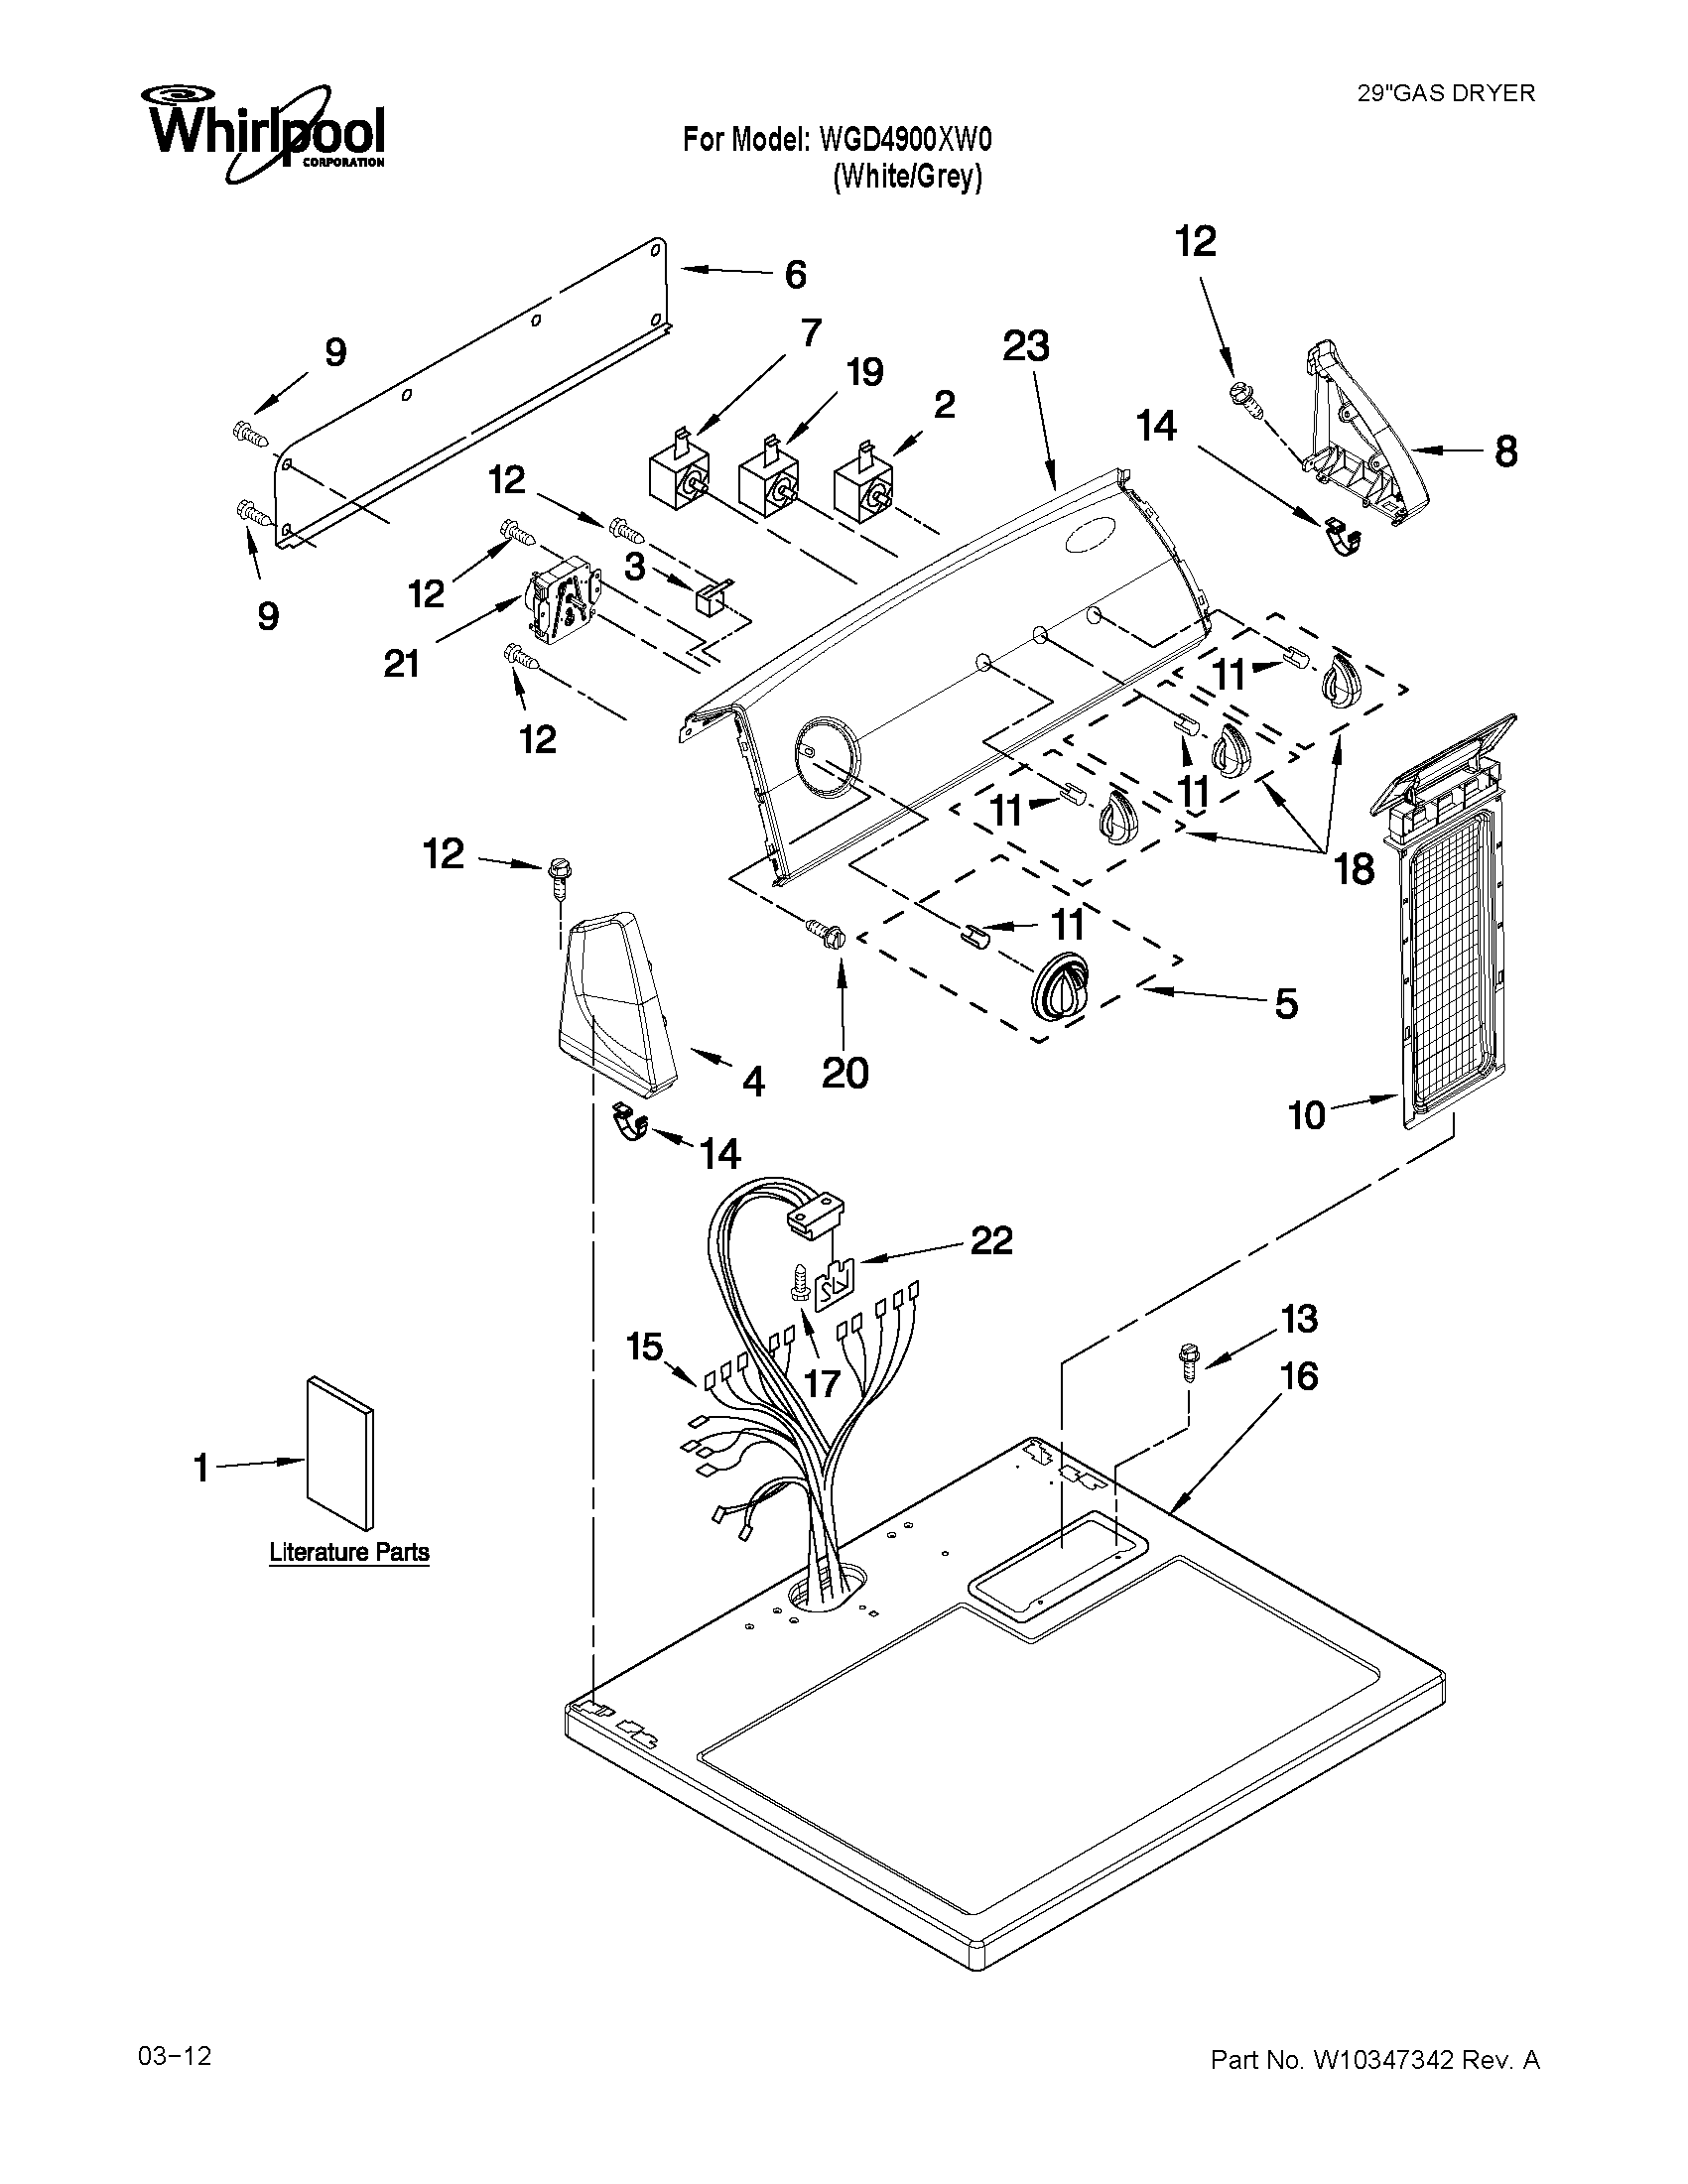 35 Whirlpool Dryer Diagram Of Parts